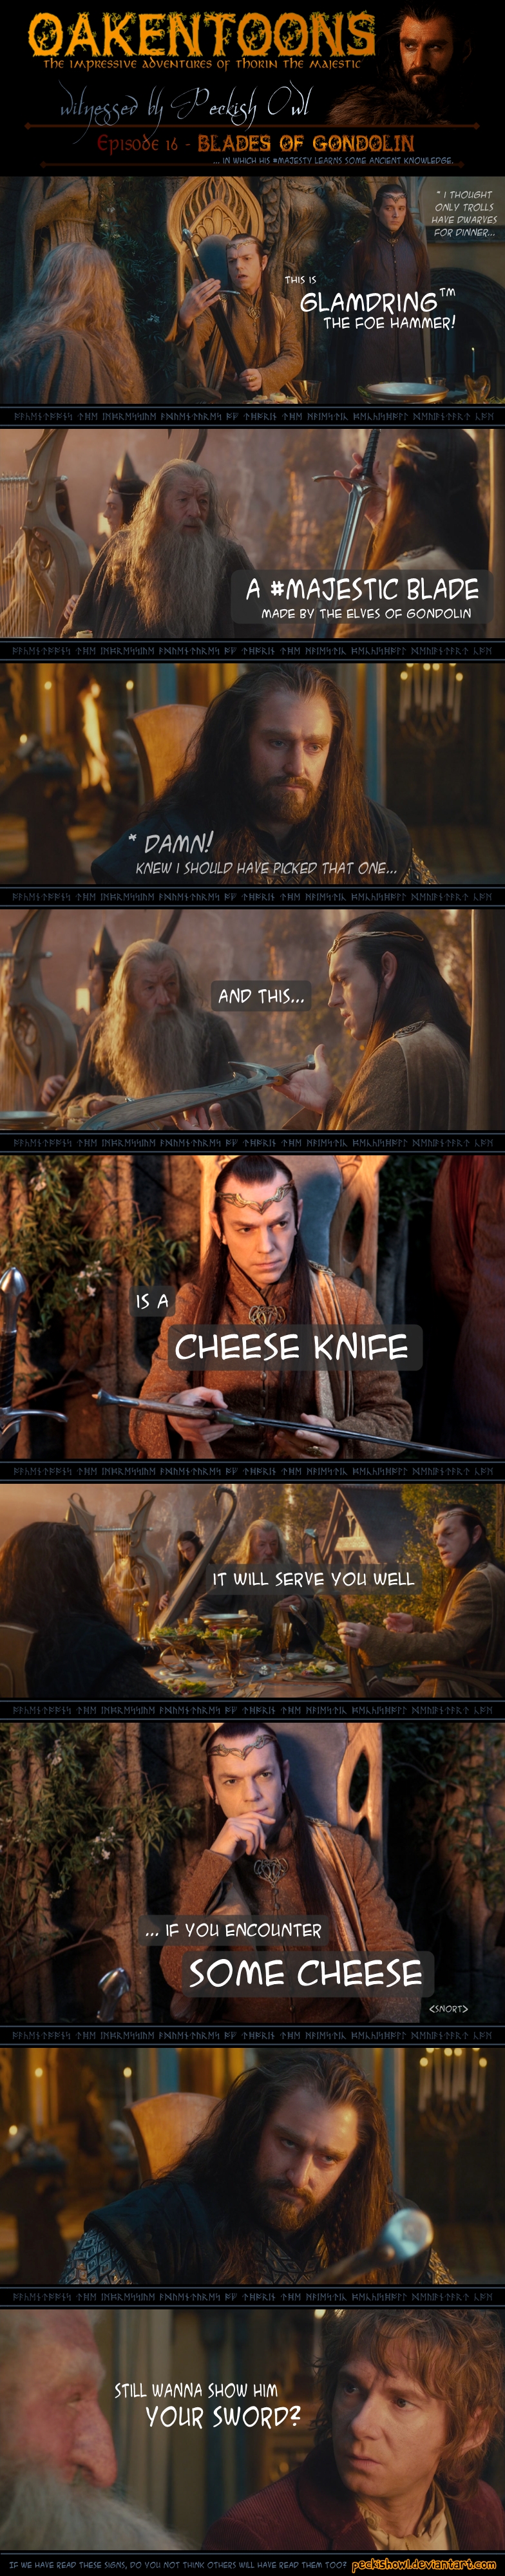 Oakentoon #16: Blades of Gondolin